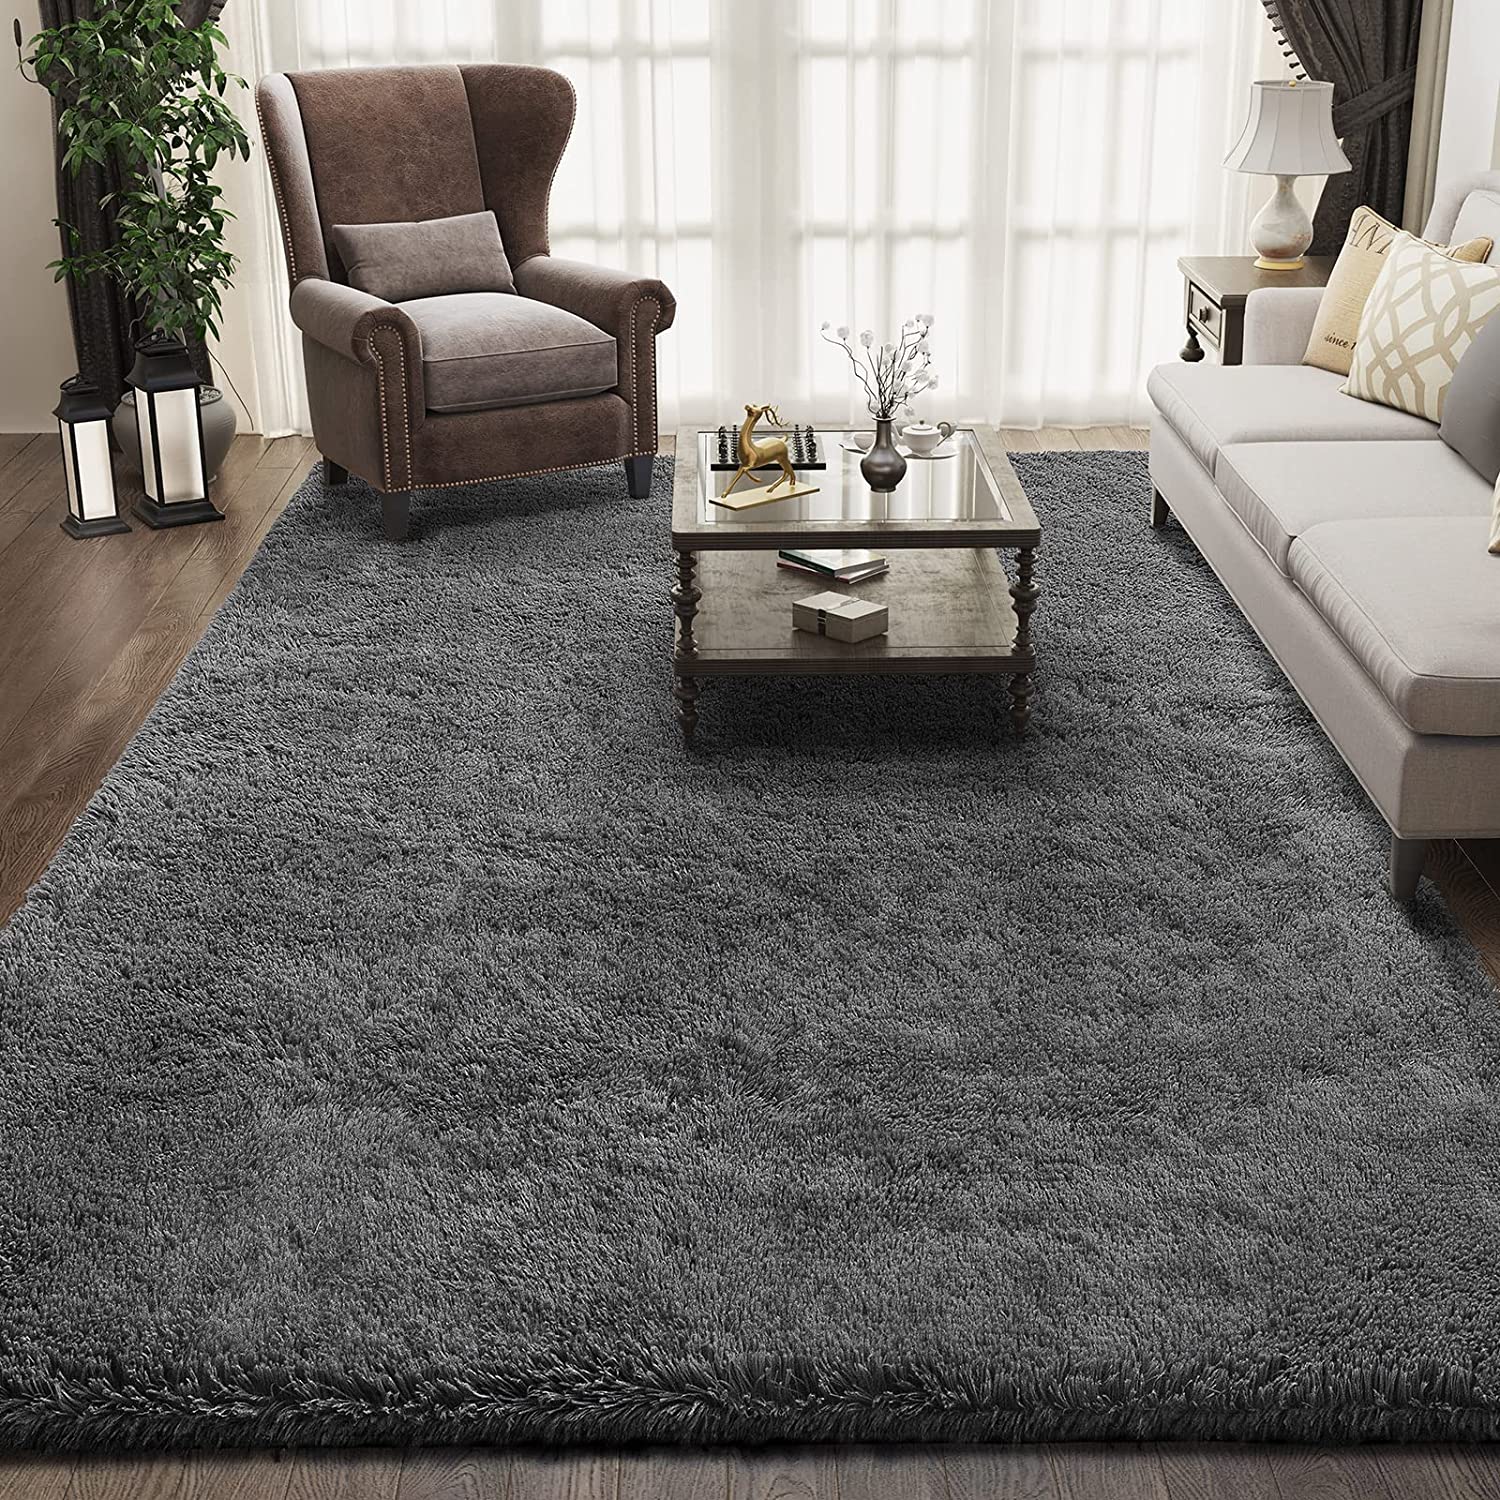 Fluffy Bedroom Rug Carpet,4X5.3 Feet,Shaggy Fuzzy Grey Rugs for